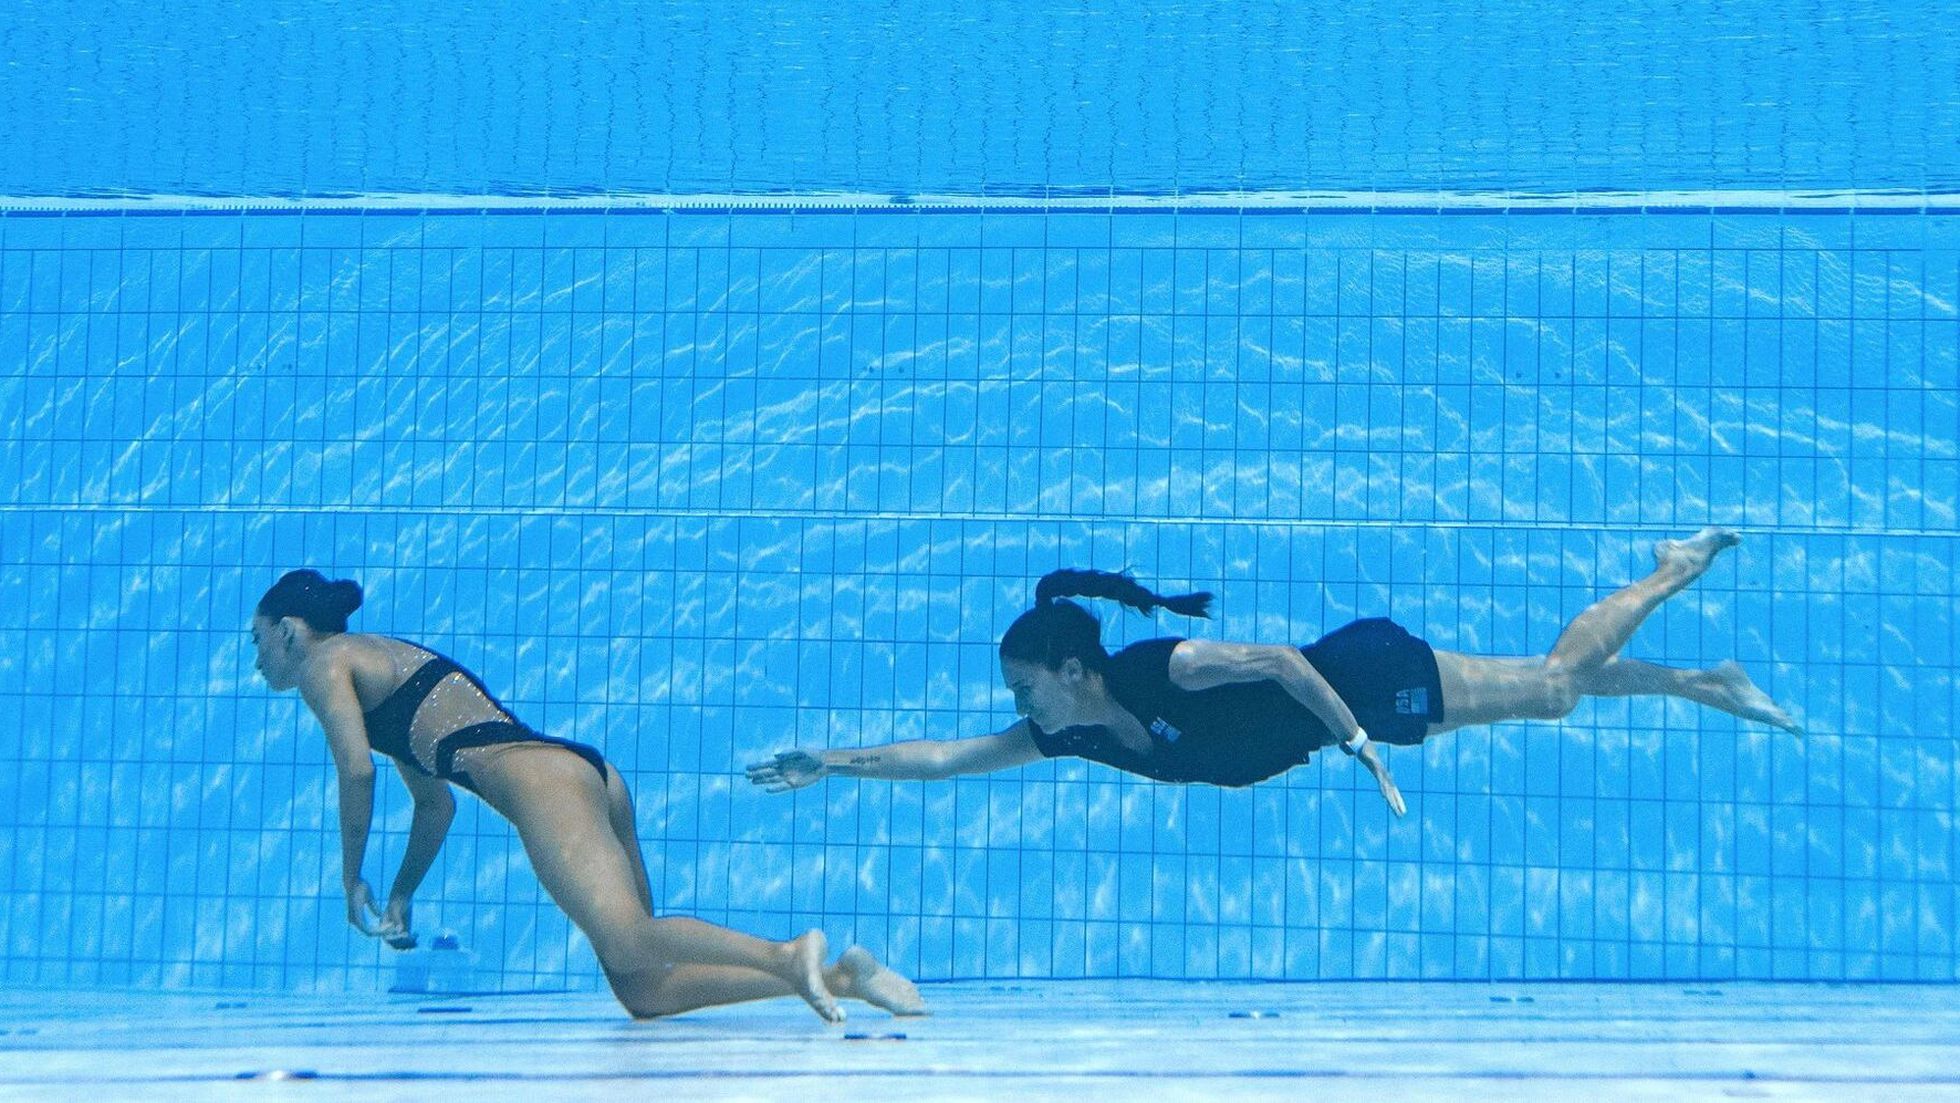 Entrenadora salva a nadadora mexicana que se desmayó en la piscina